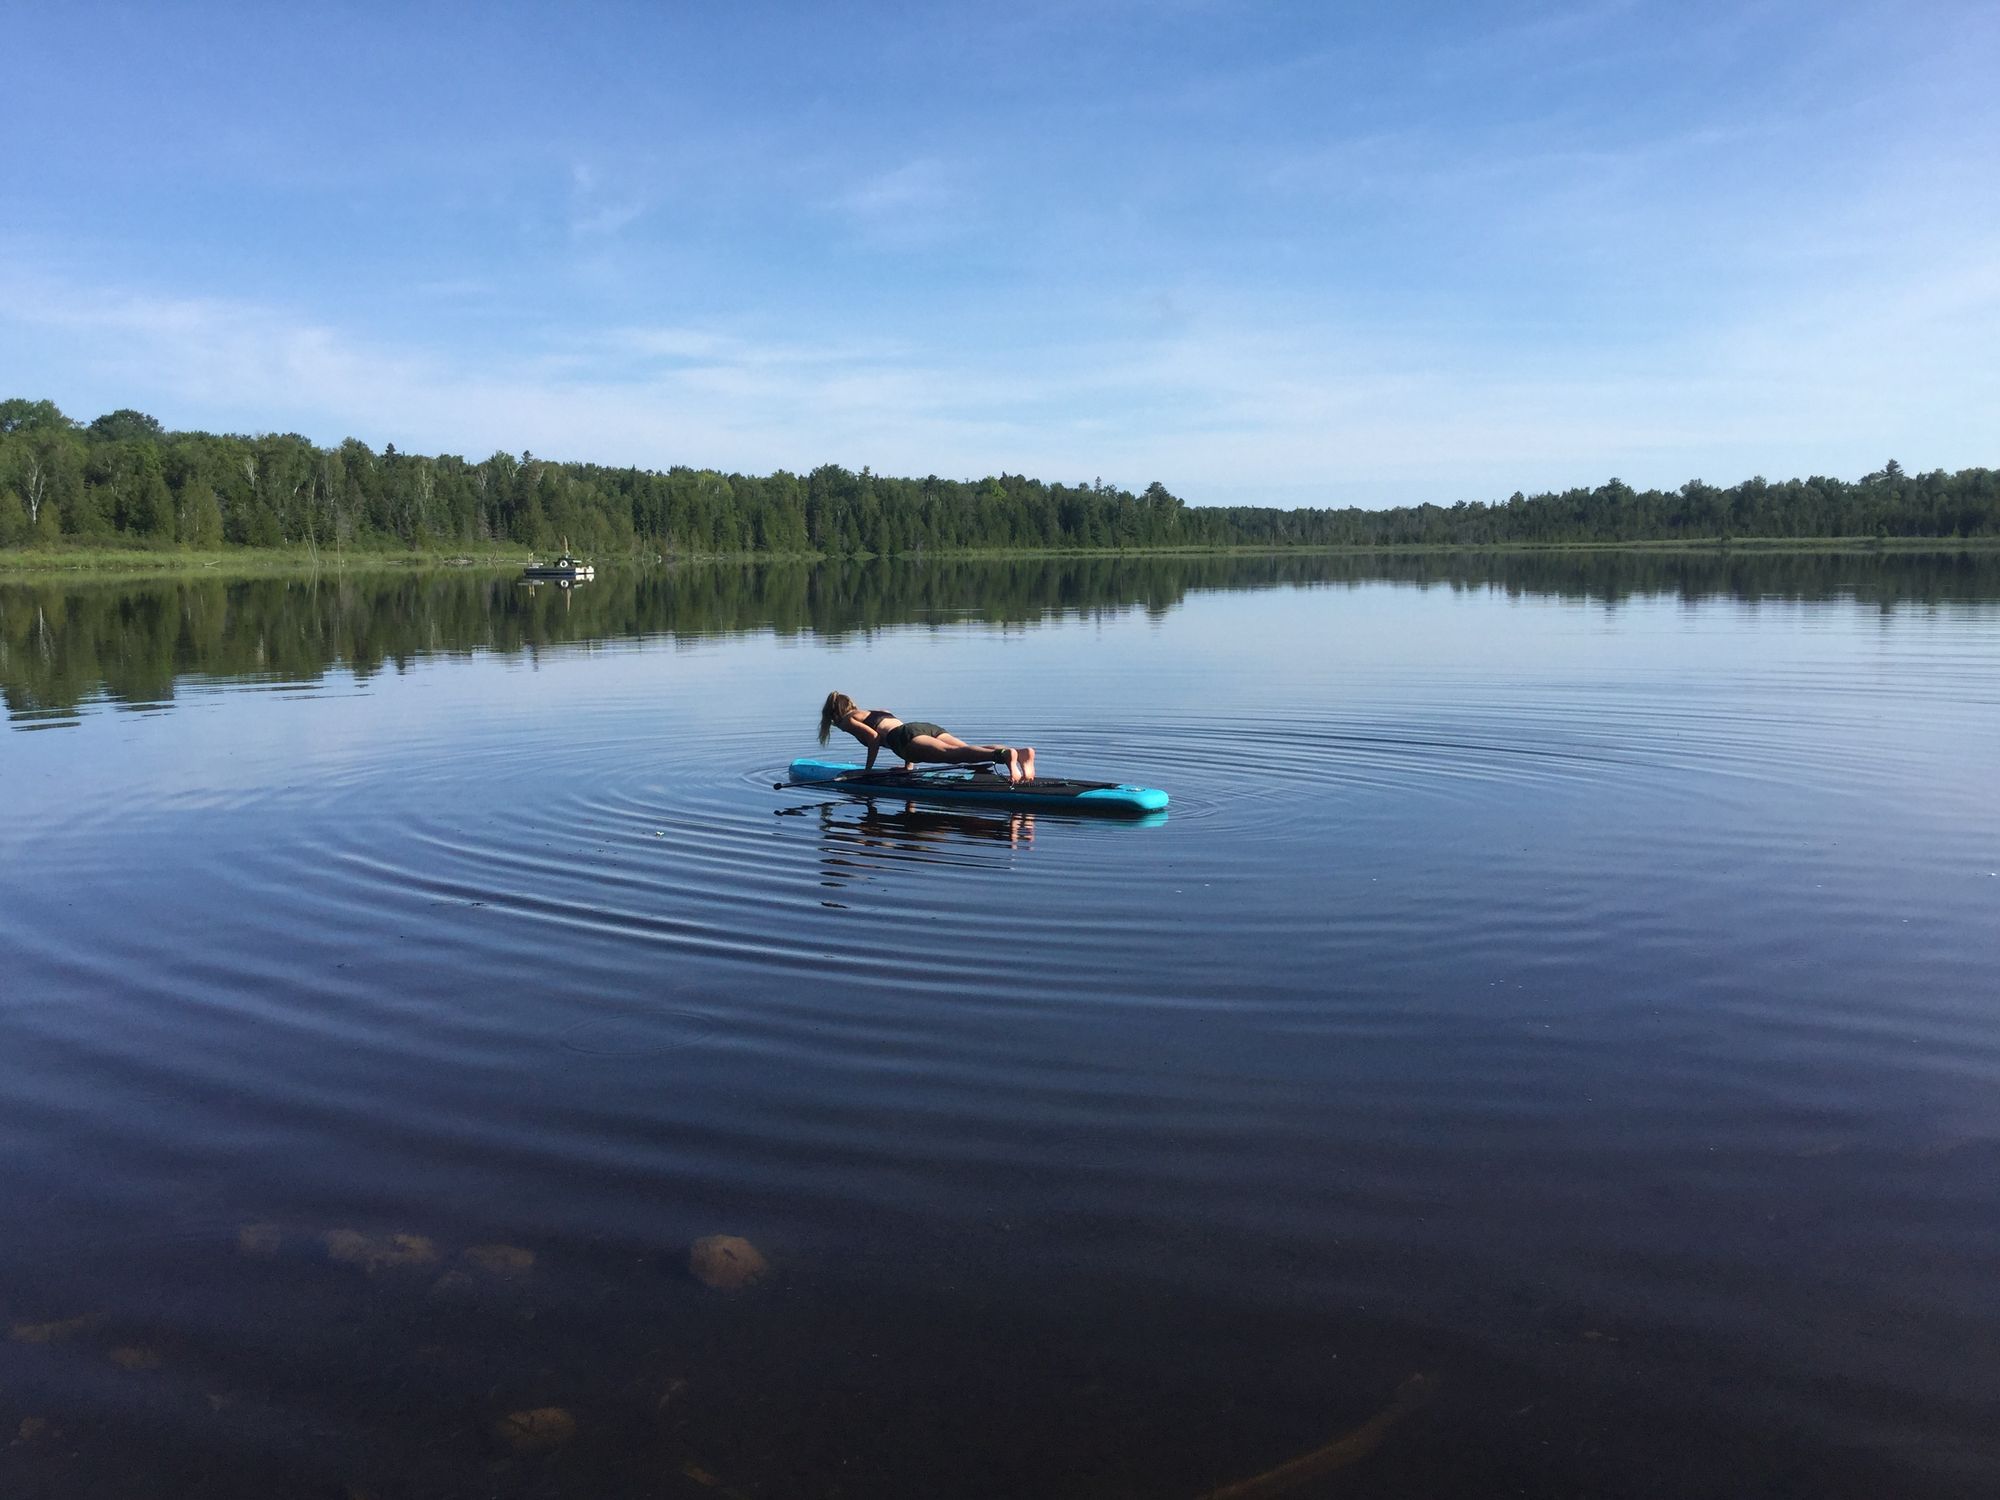 Plank Yoga Pose on Inflatable Paddle Board on calm lake